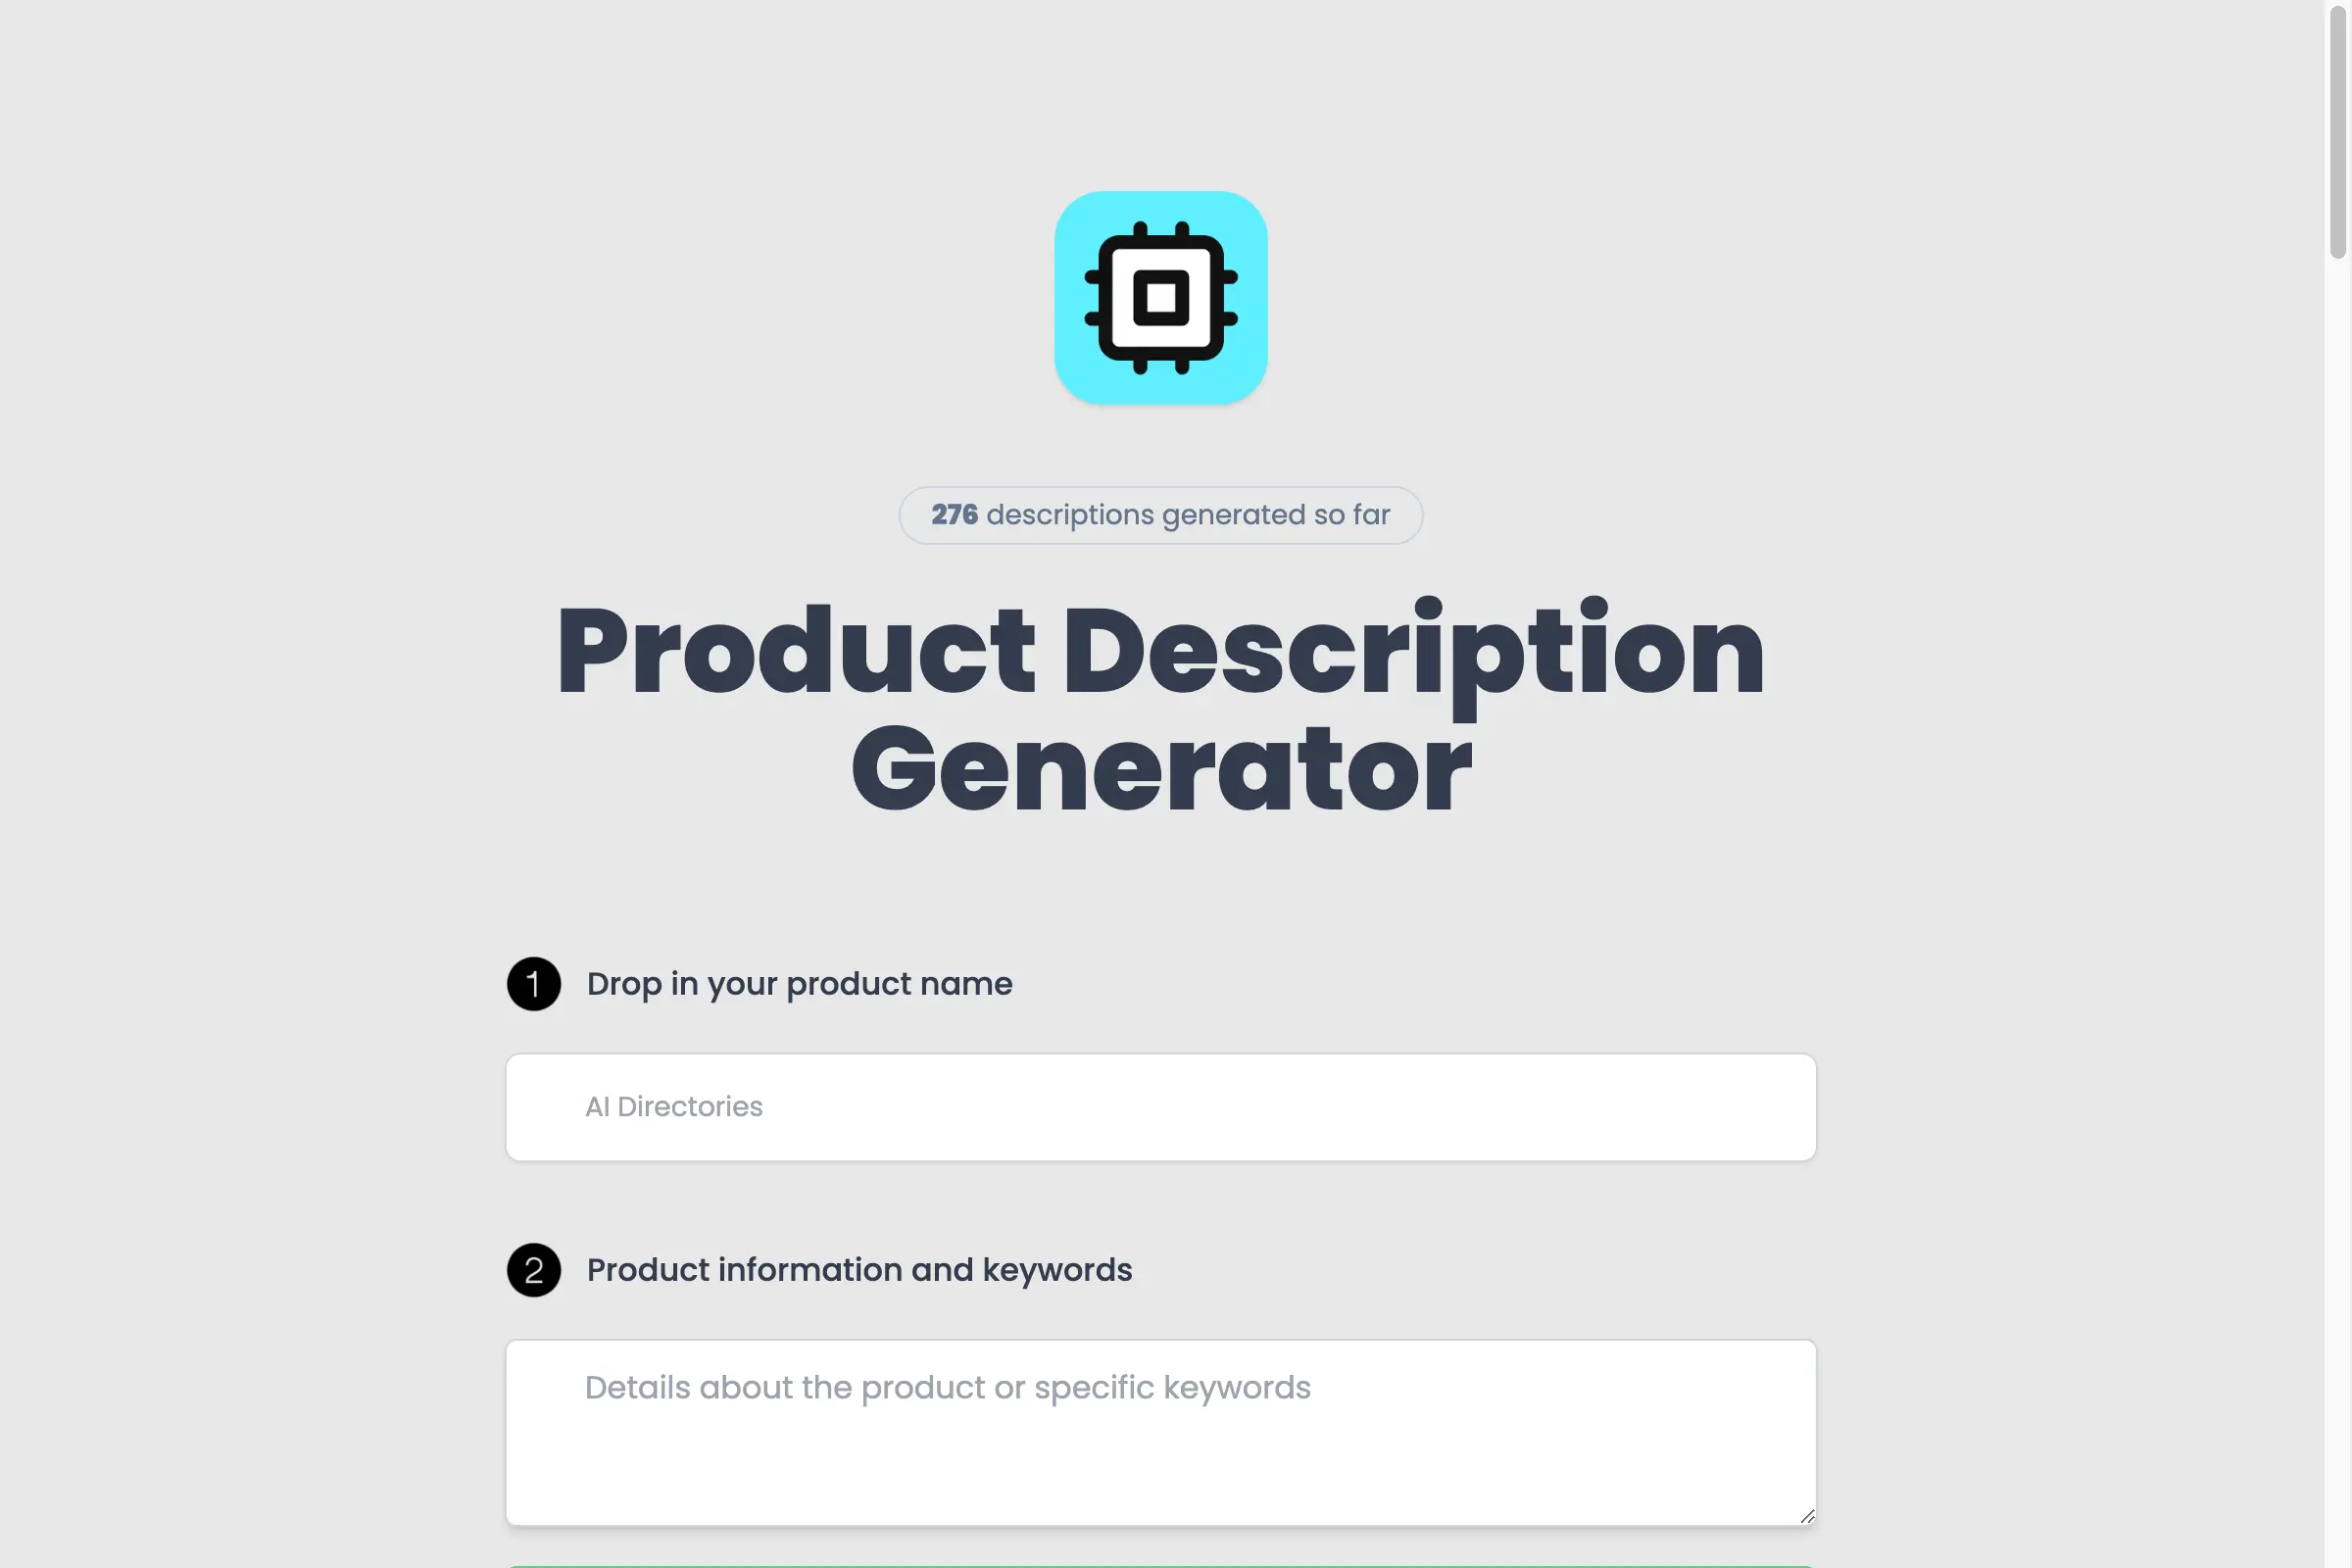 Product Description Generator by AIDirectories